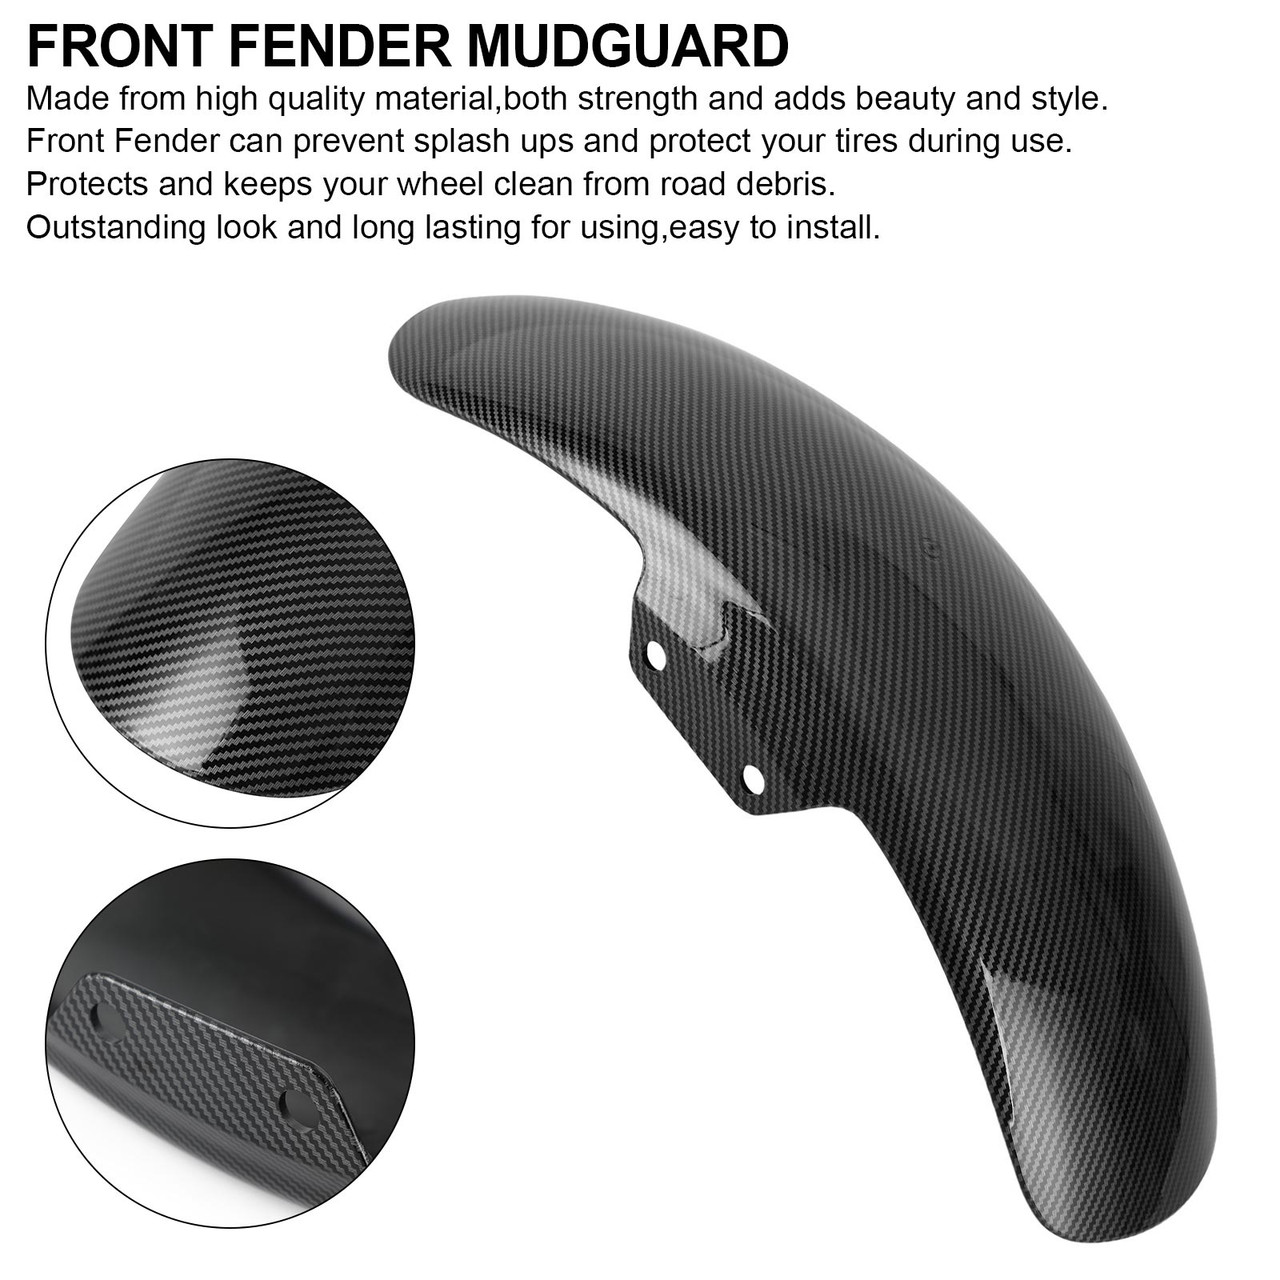 Front Fender Mudguard Fit For Honda Rebel CMX300 CMX500 2017-2021 CBN